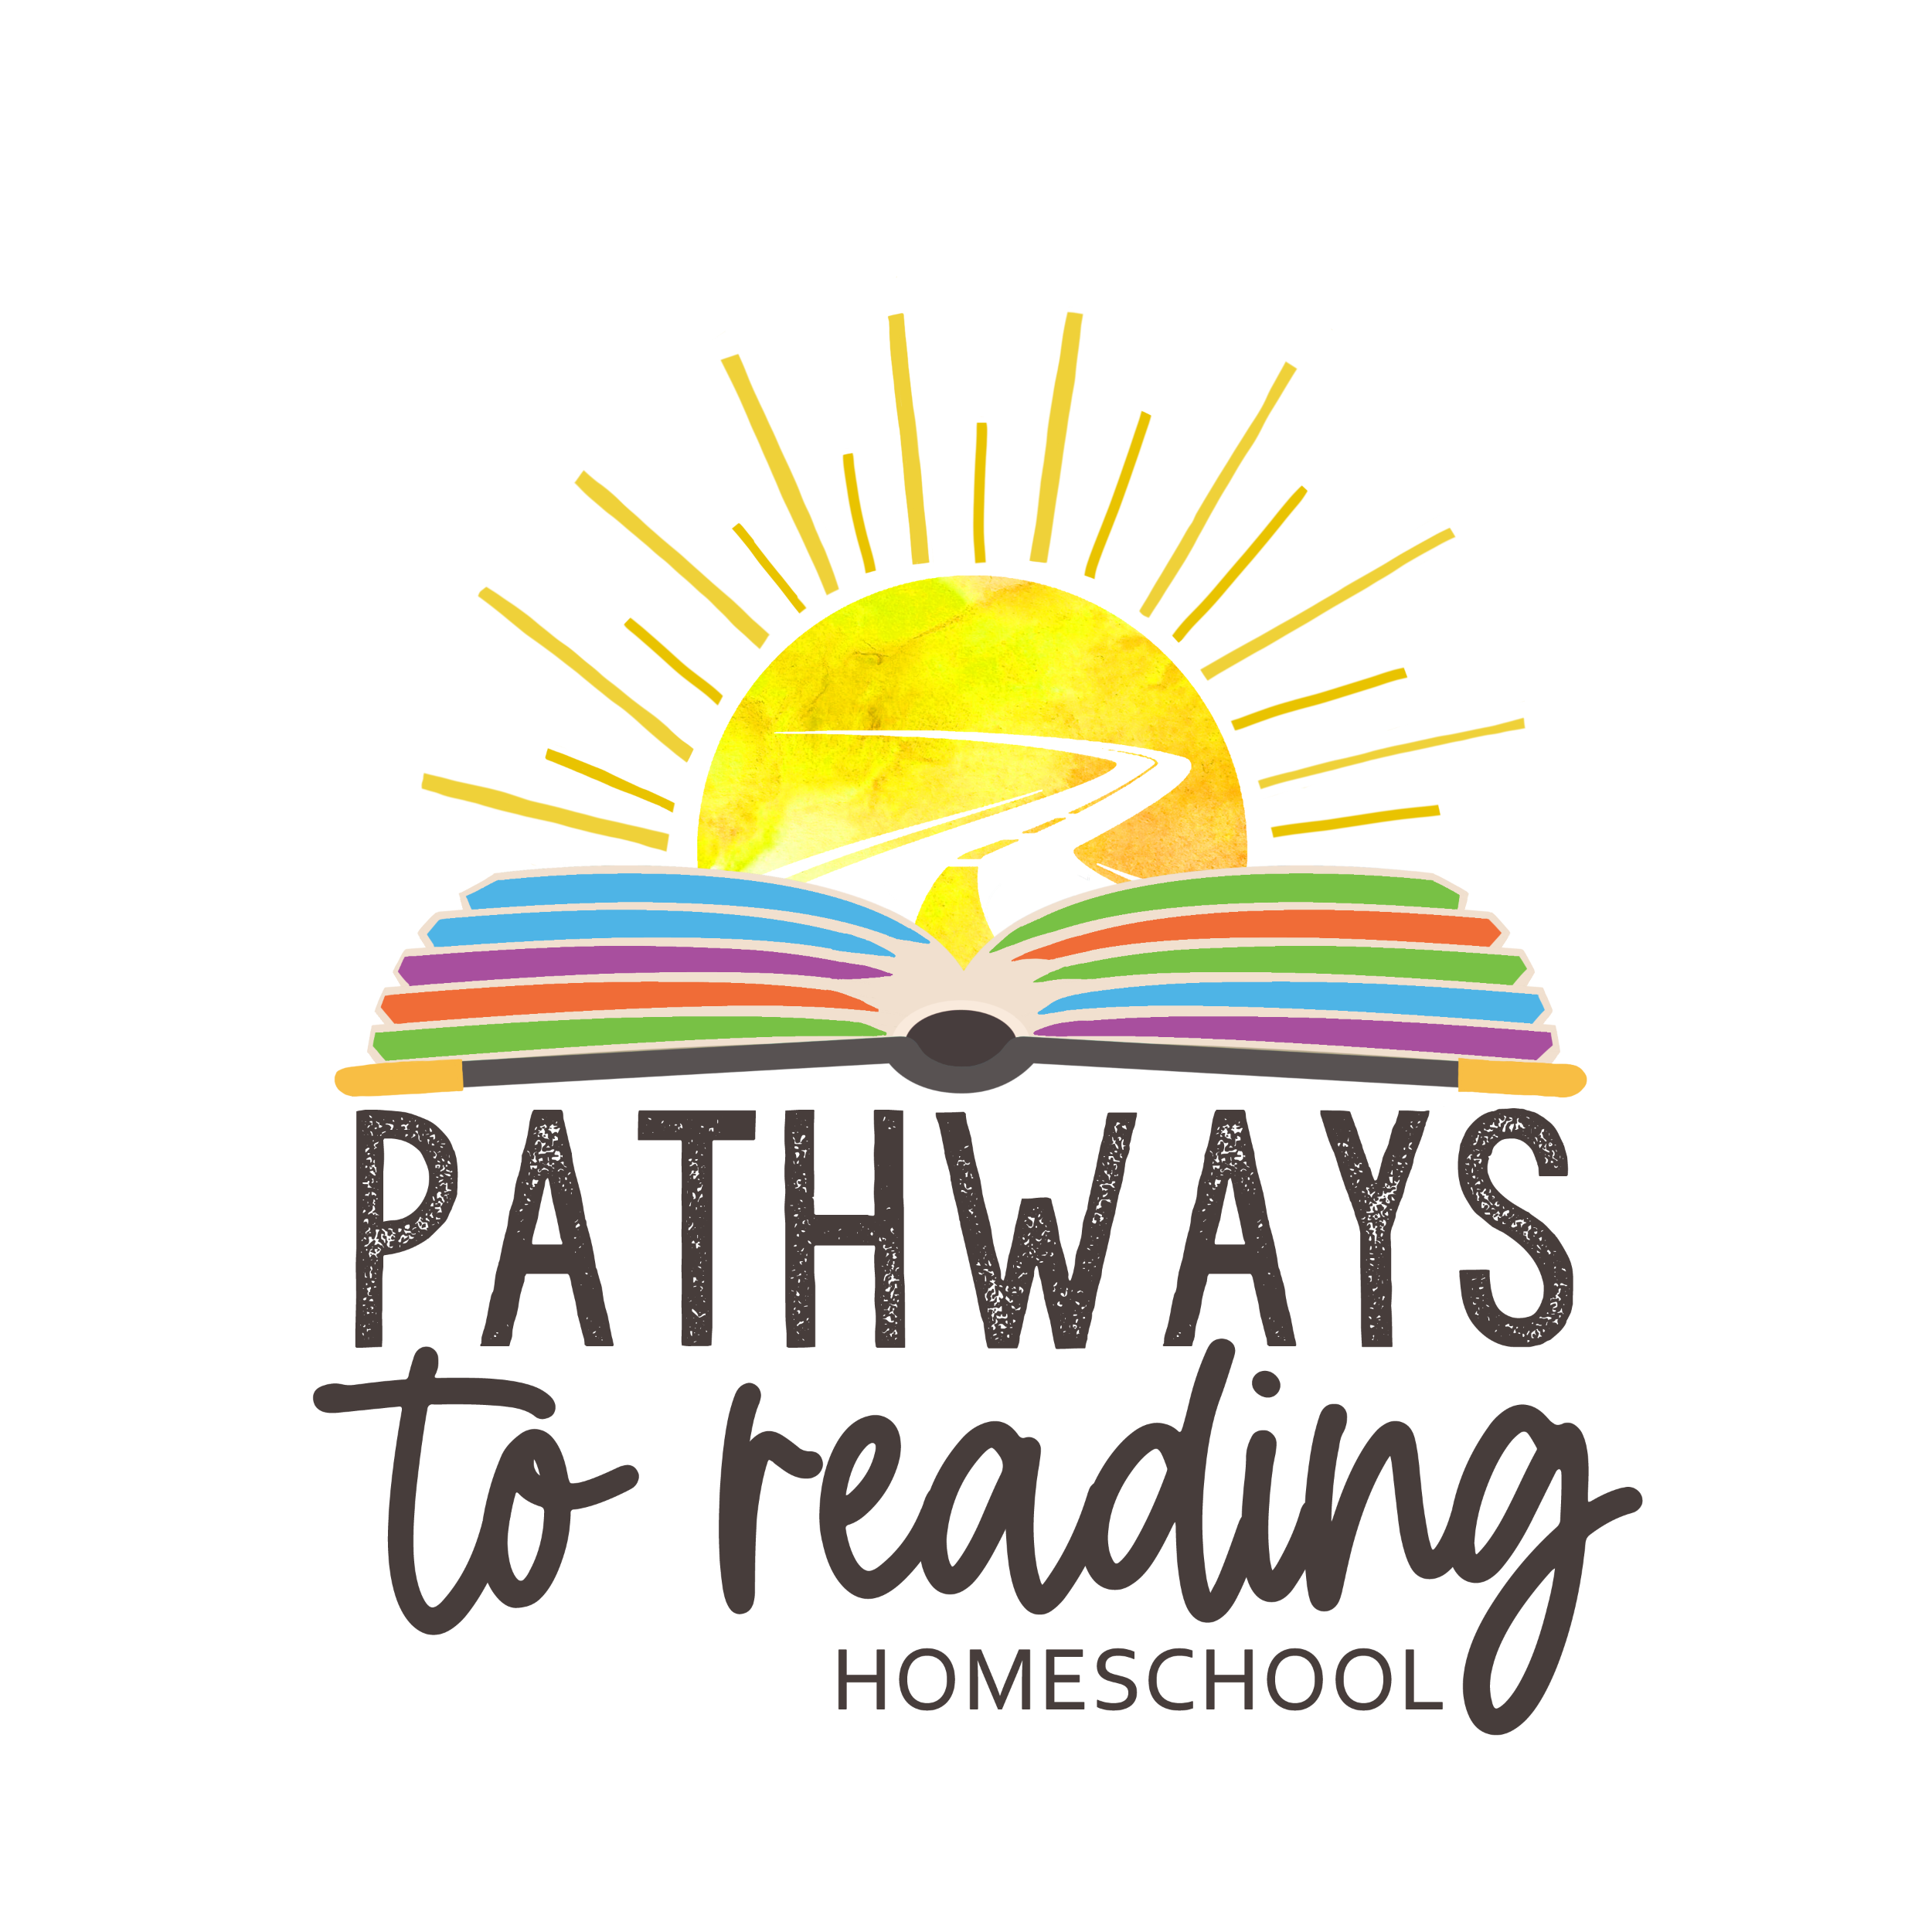 Pathways to Reading Homeschool logo